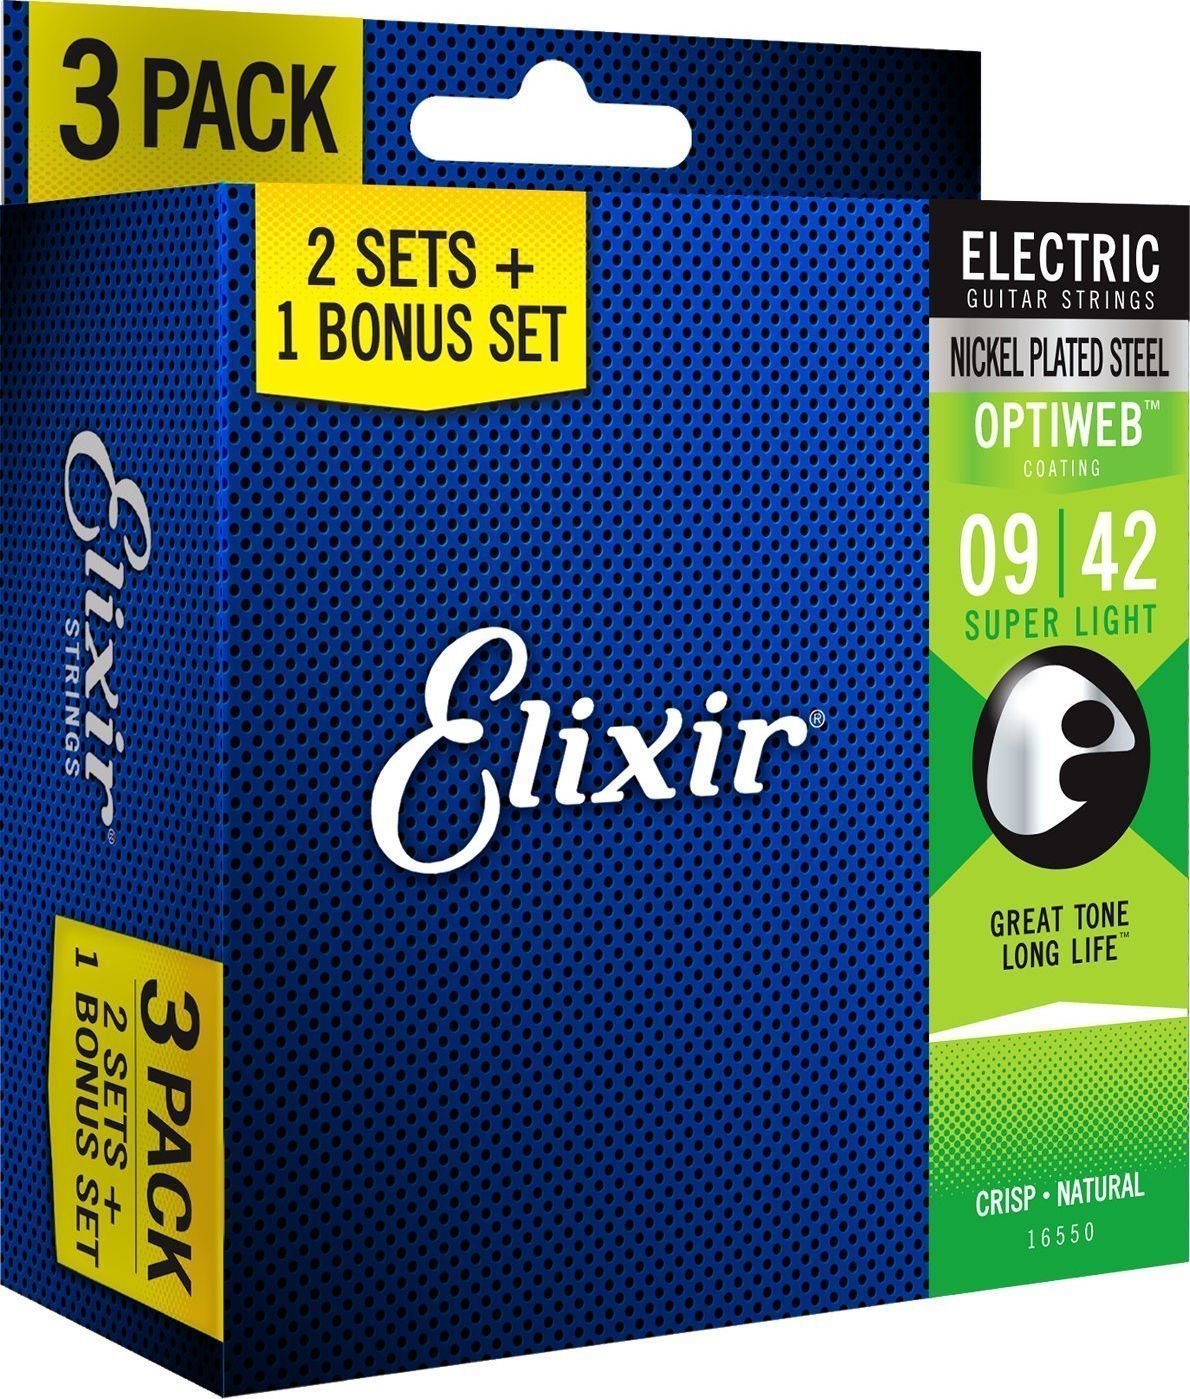 Struny pre elektrickú gitaru Elixir 16550 OPTIWEB Coating Super Light 9-42 3-PACK